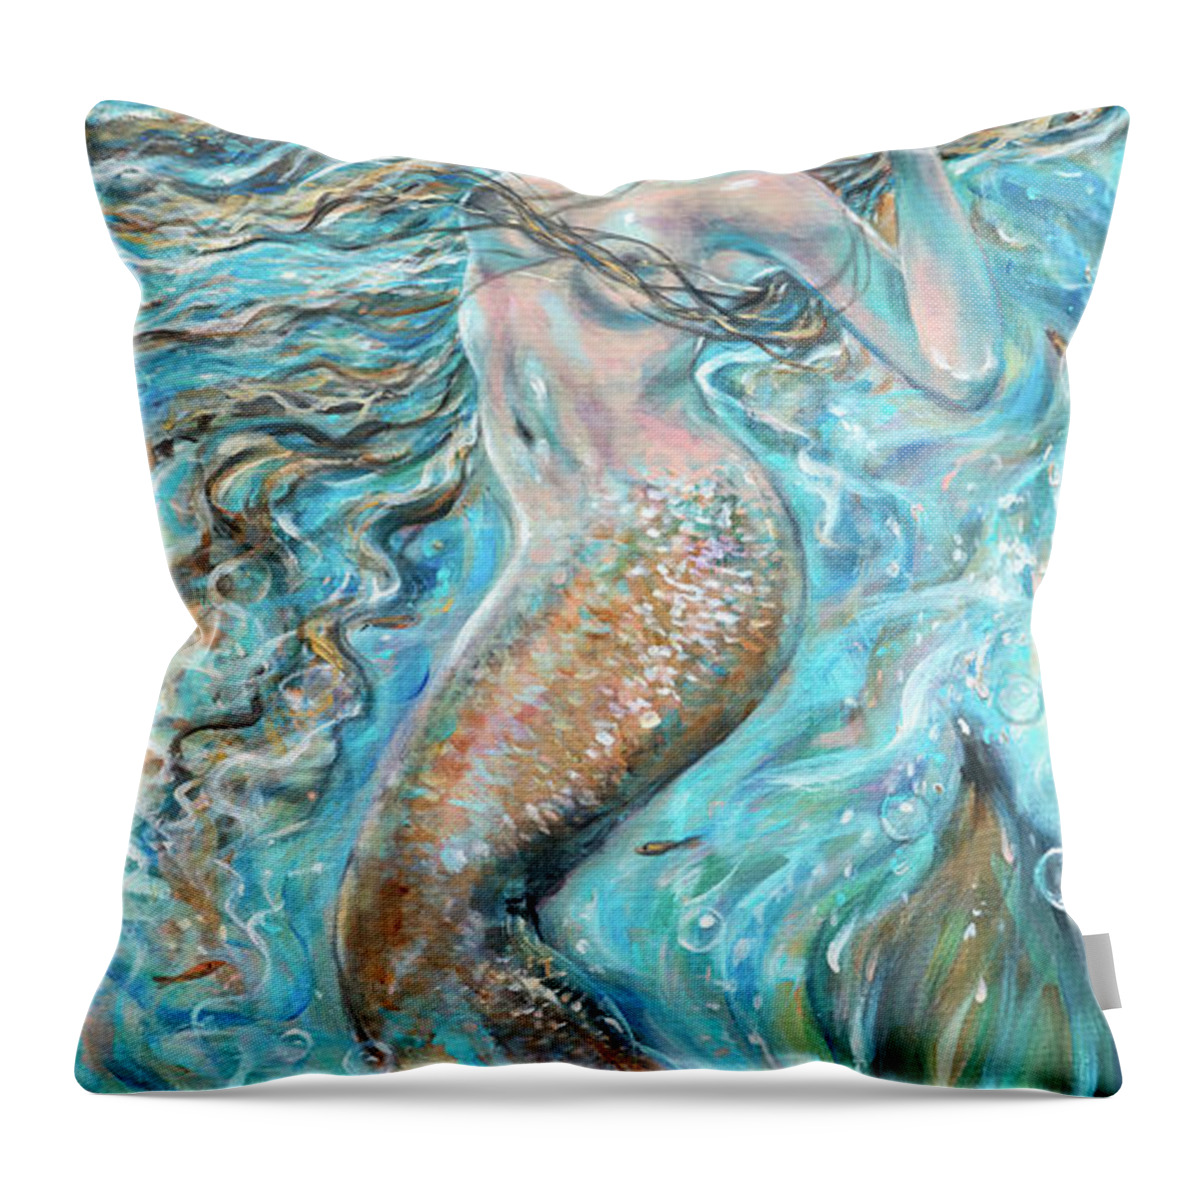 Mermaid Throw Pillow featuring the painting Aqua Yoga by Linda Olsen